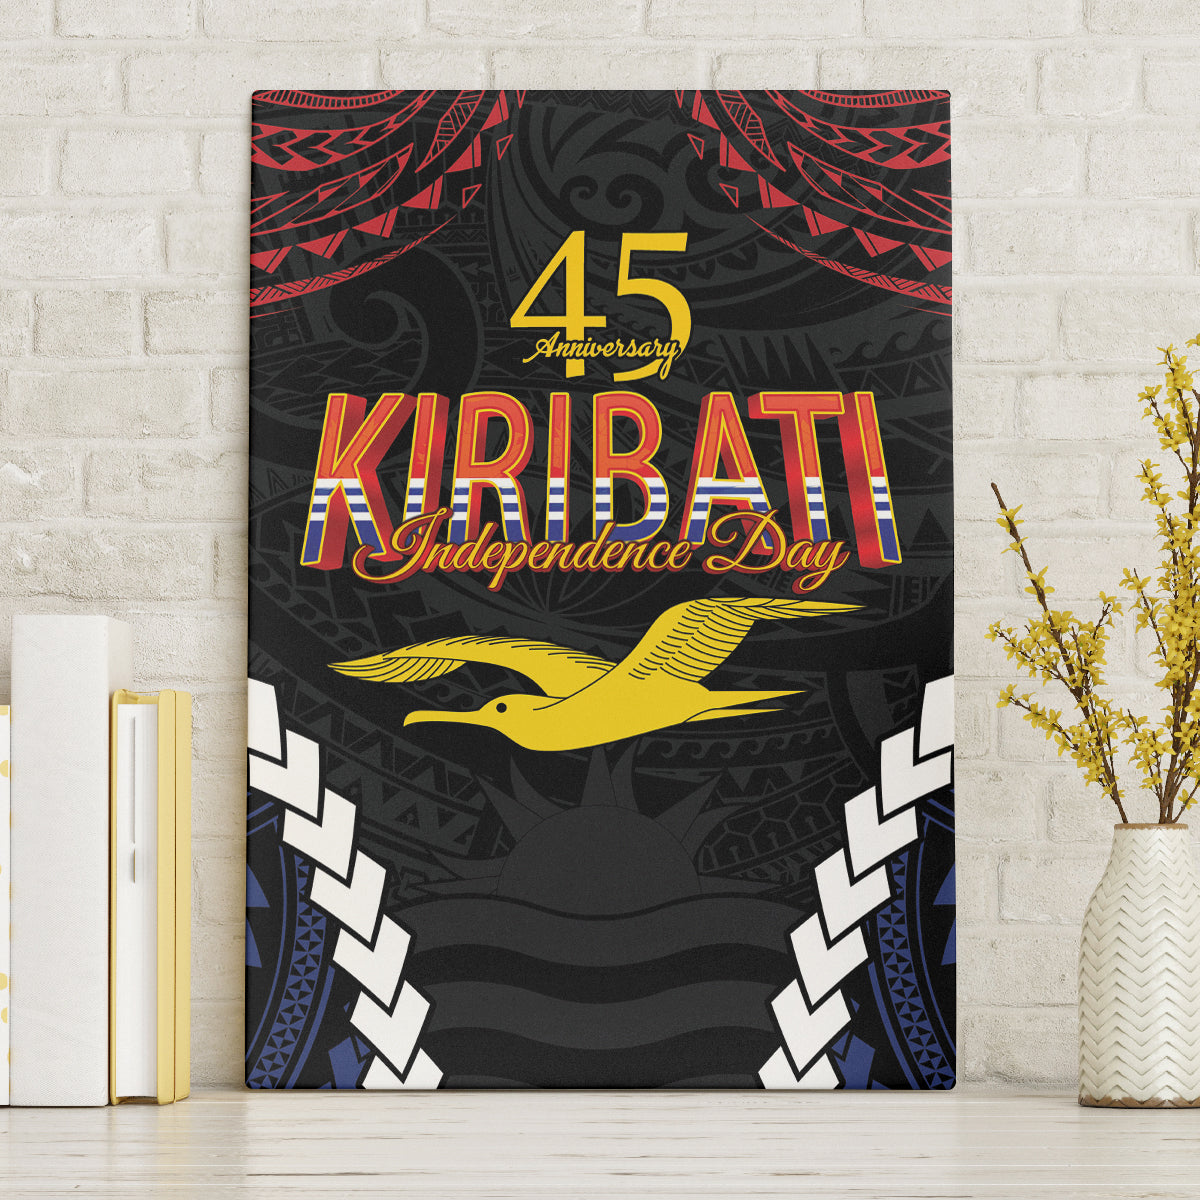 Kiribati 45th Anniversary Independence Day Canvas Wall Art Since 1979